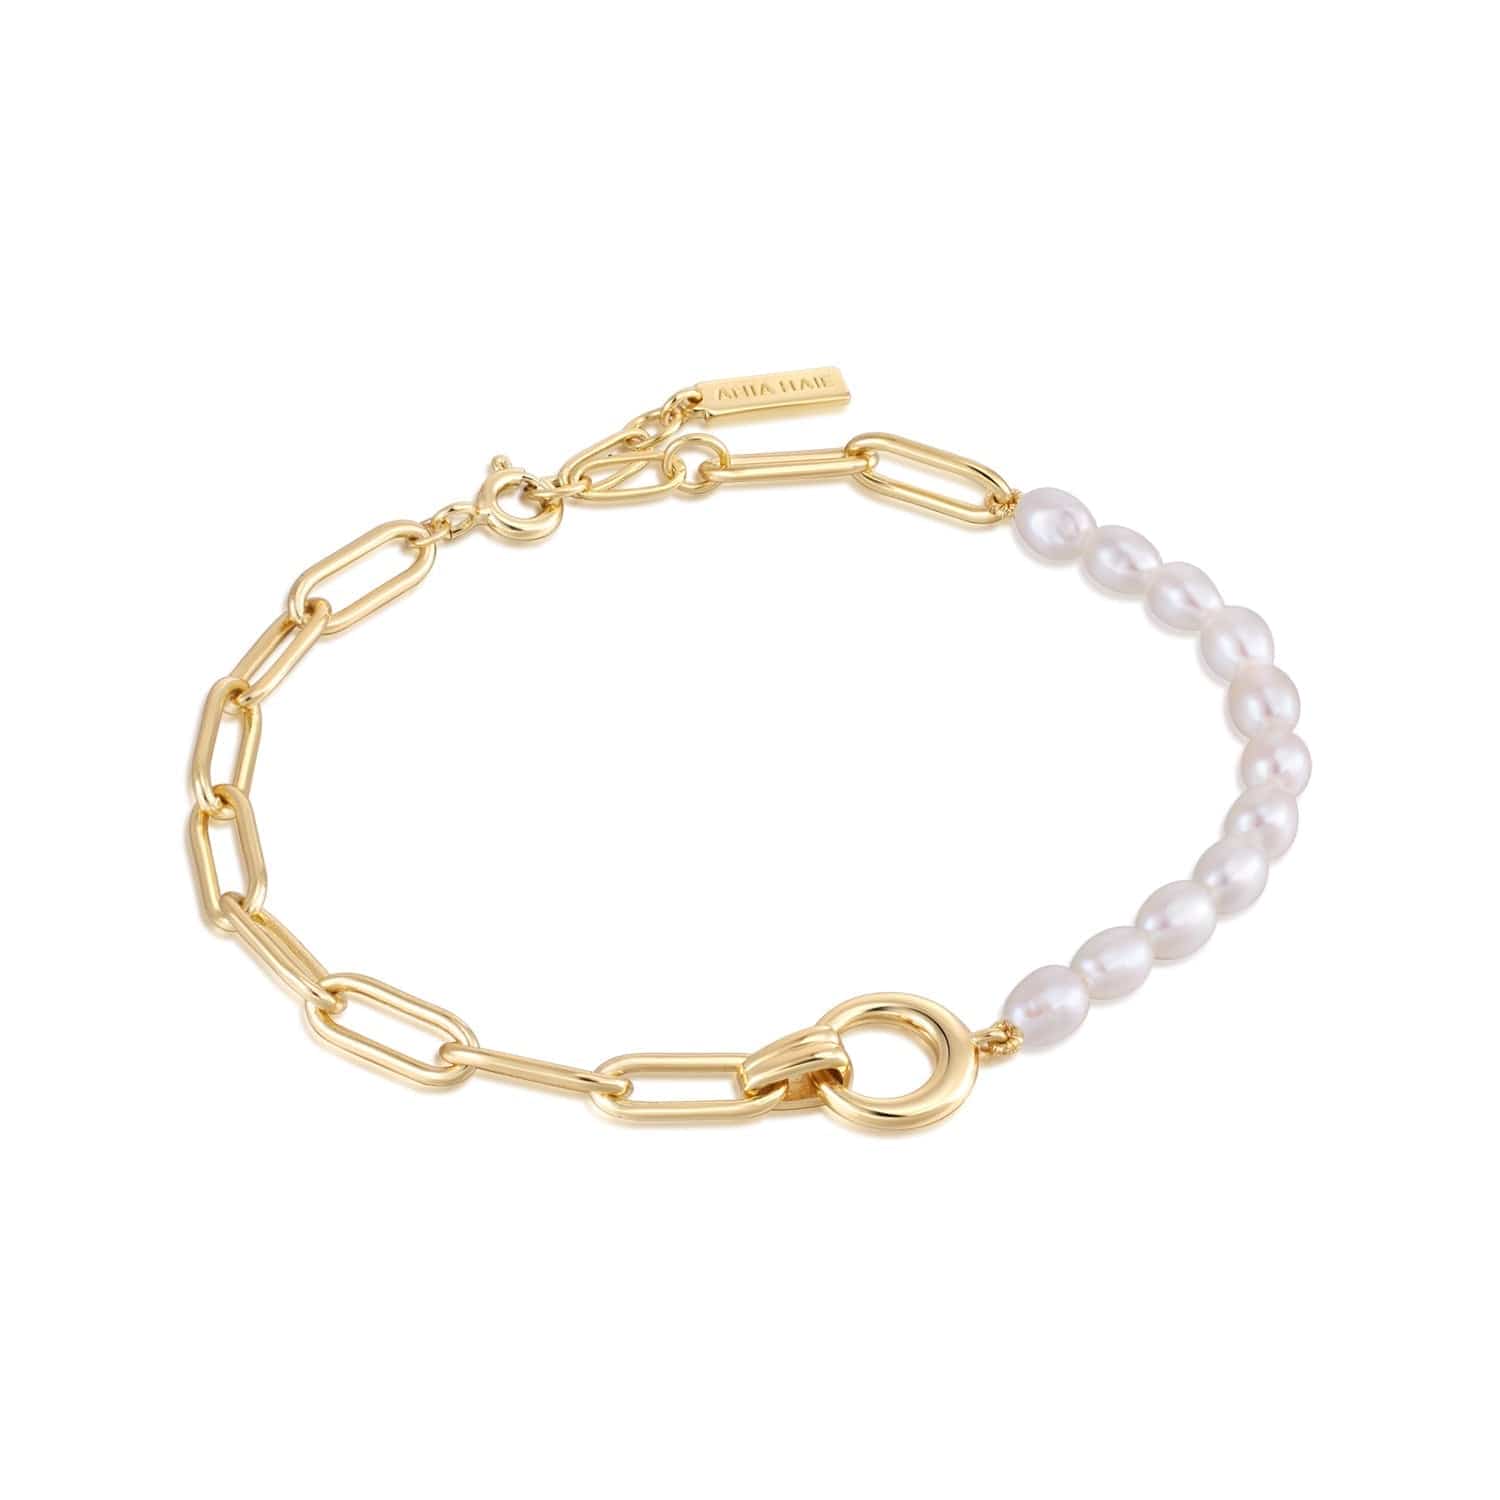 Adjustable Metal Bracelet, Coin Charm Bracelet, Link Cable Bracelet, Chunky  Chain Bracelet, Gold Cable Chain - Etsy | Coin charm bracelet, Metal  bracelets, Coin bracelet